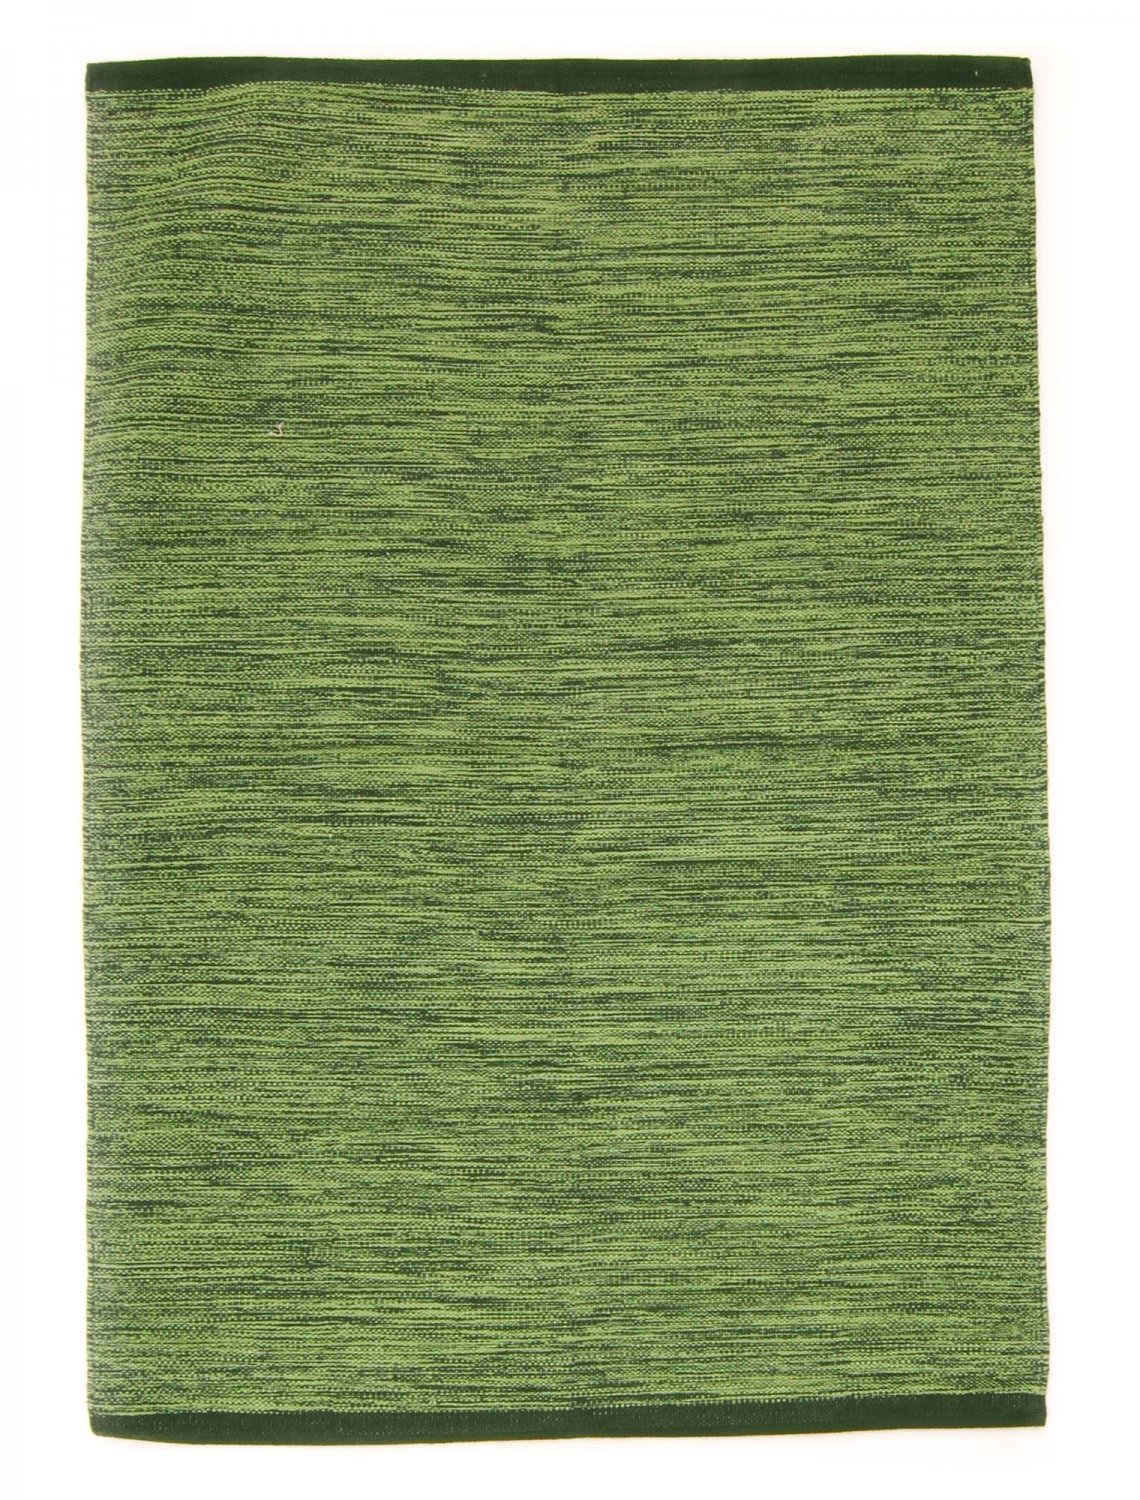 Voddenkleed - Slite (groen)